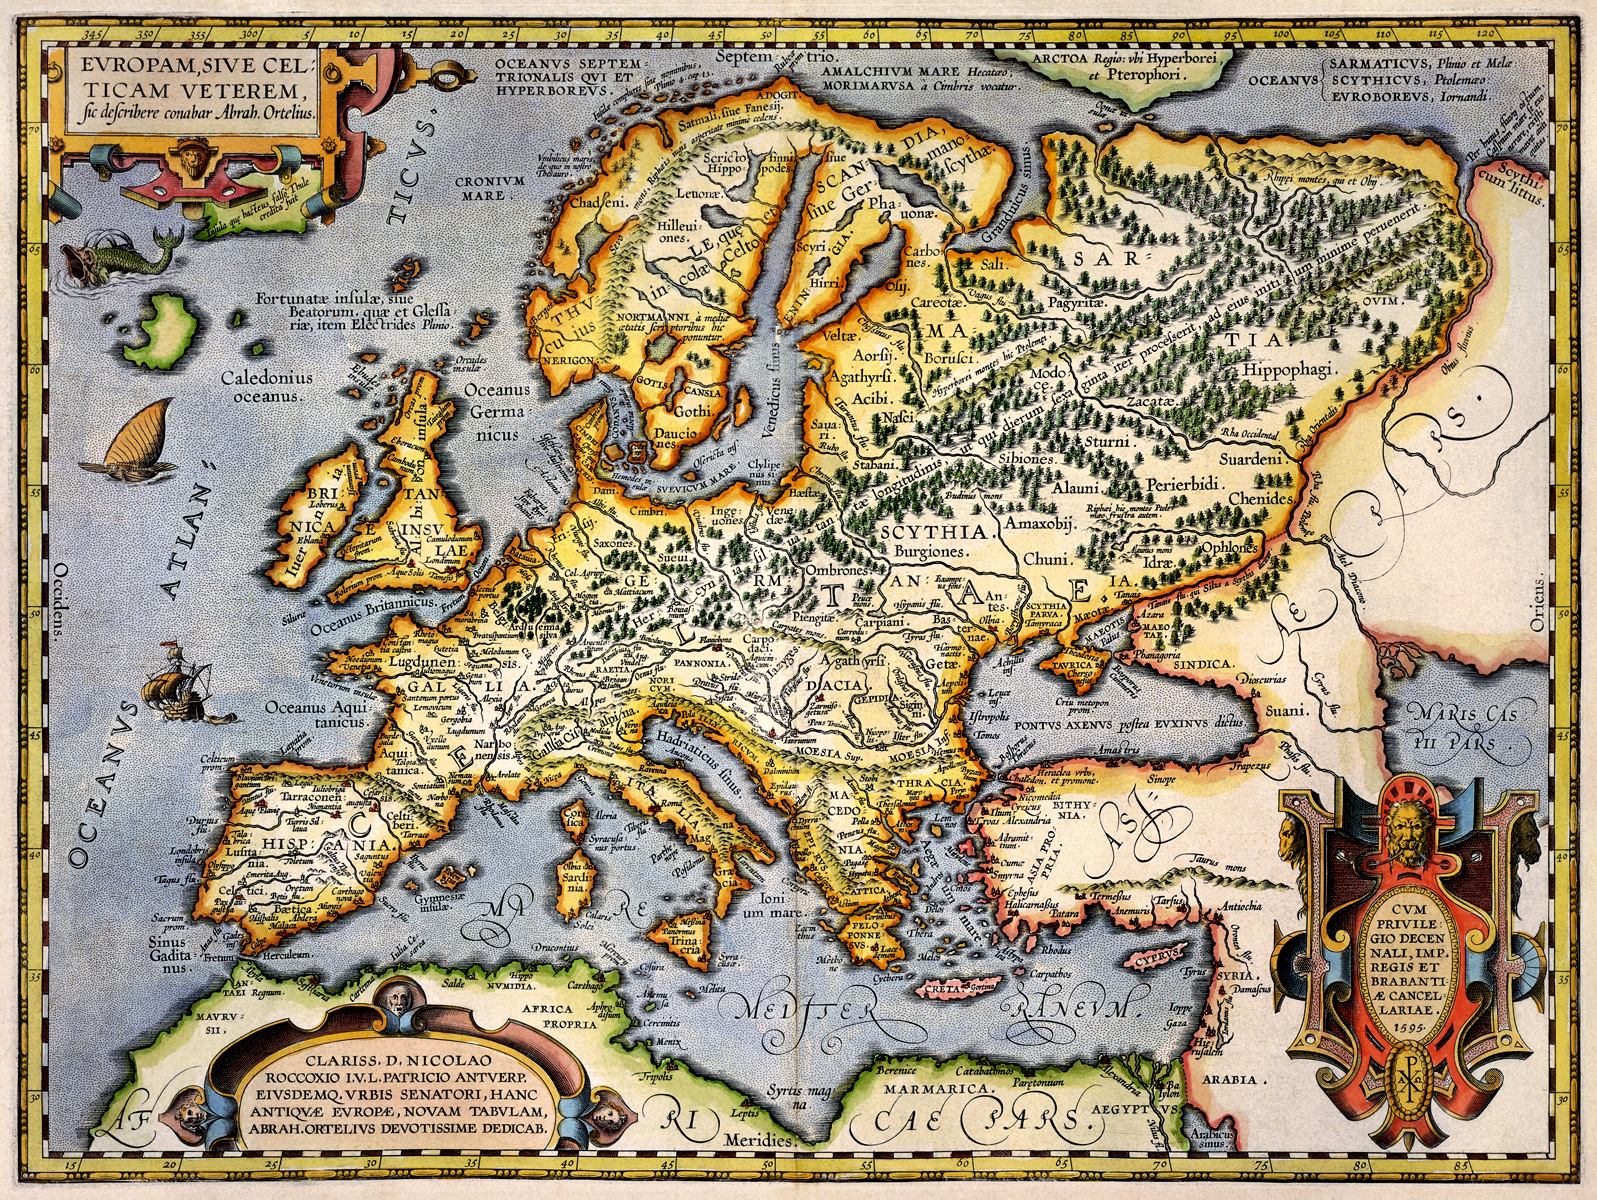 Europe, 1595